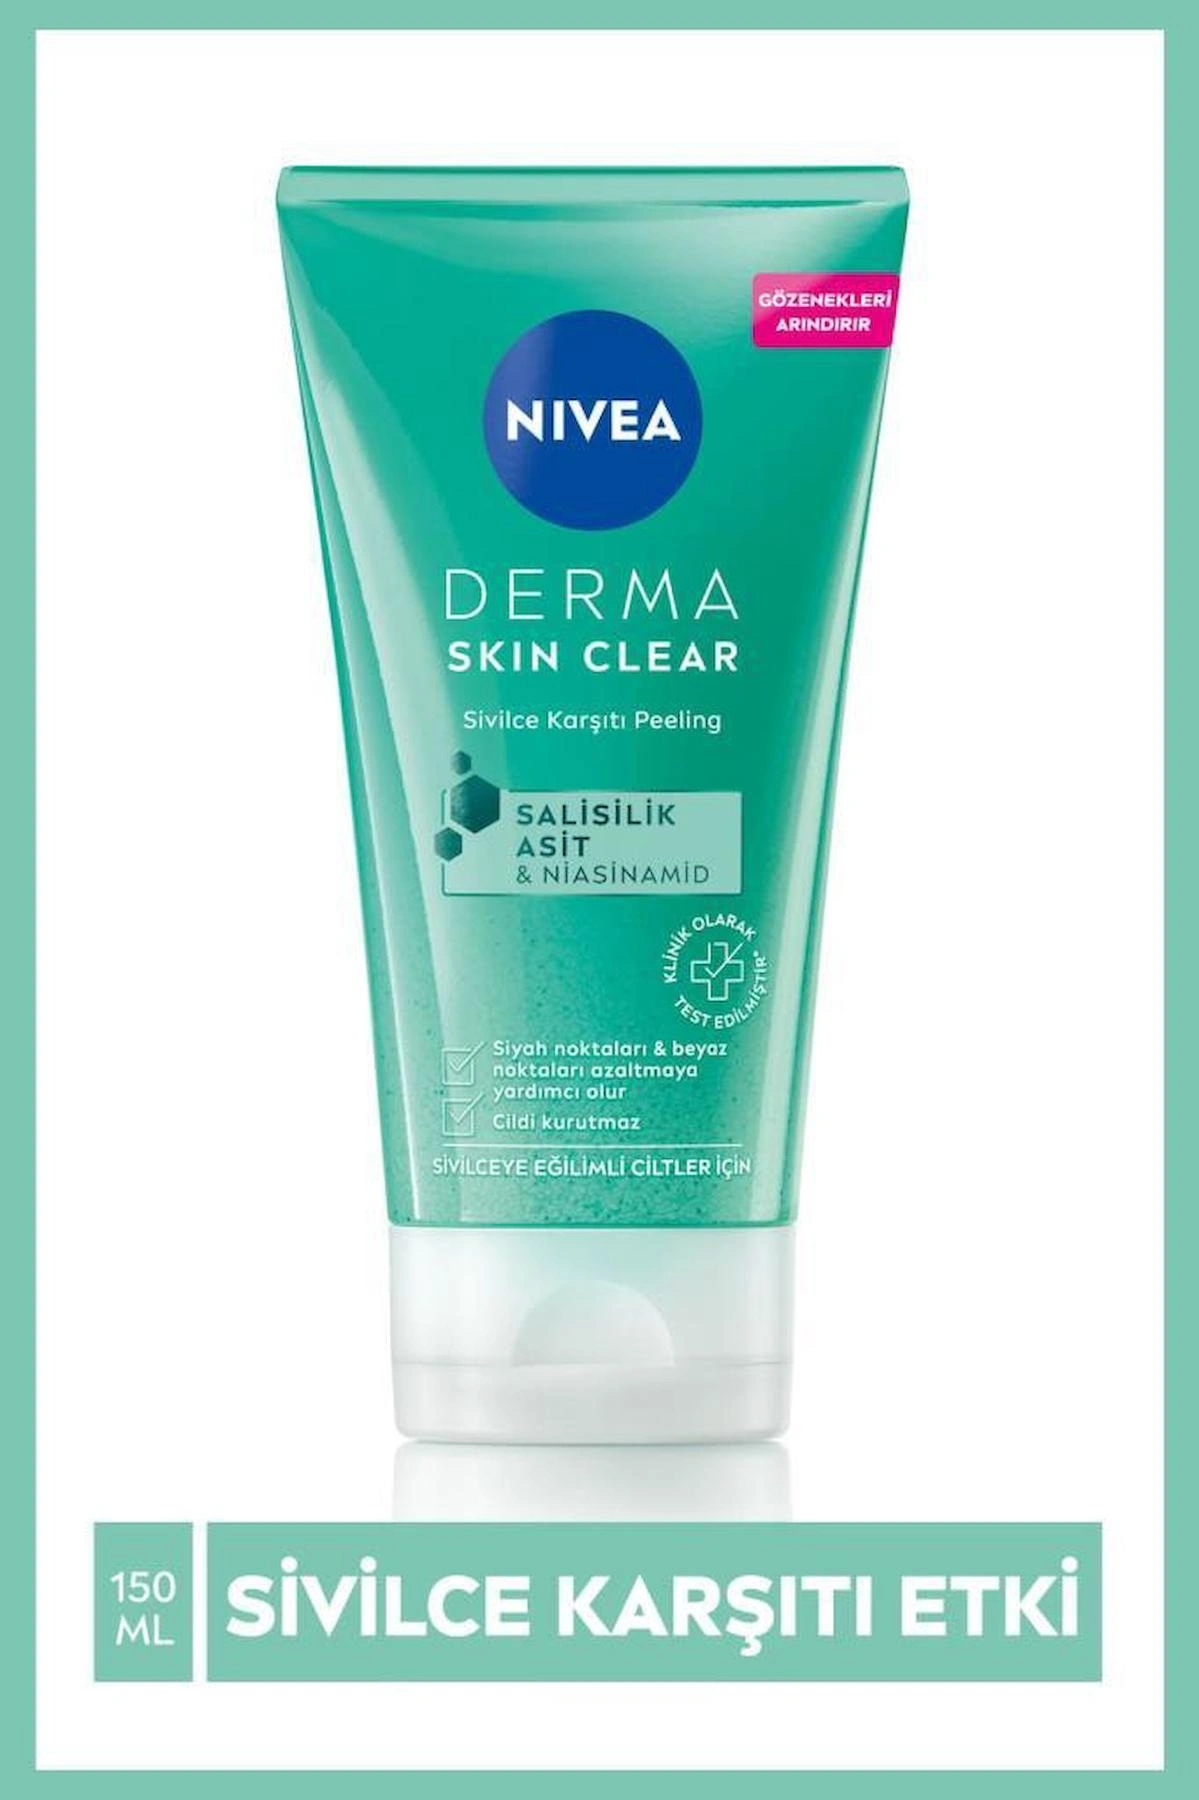 Nivea Derma Skin Clear Sivilce Karşıtı Peeling 150 ml - 1